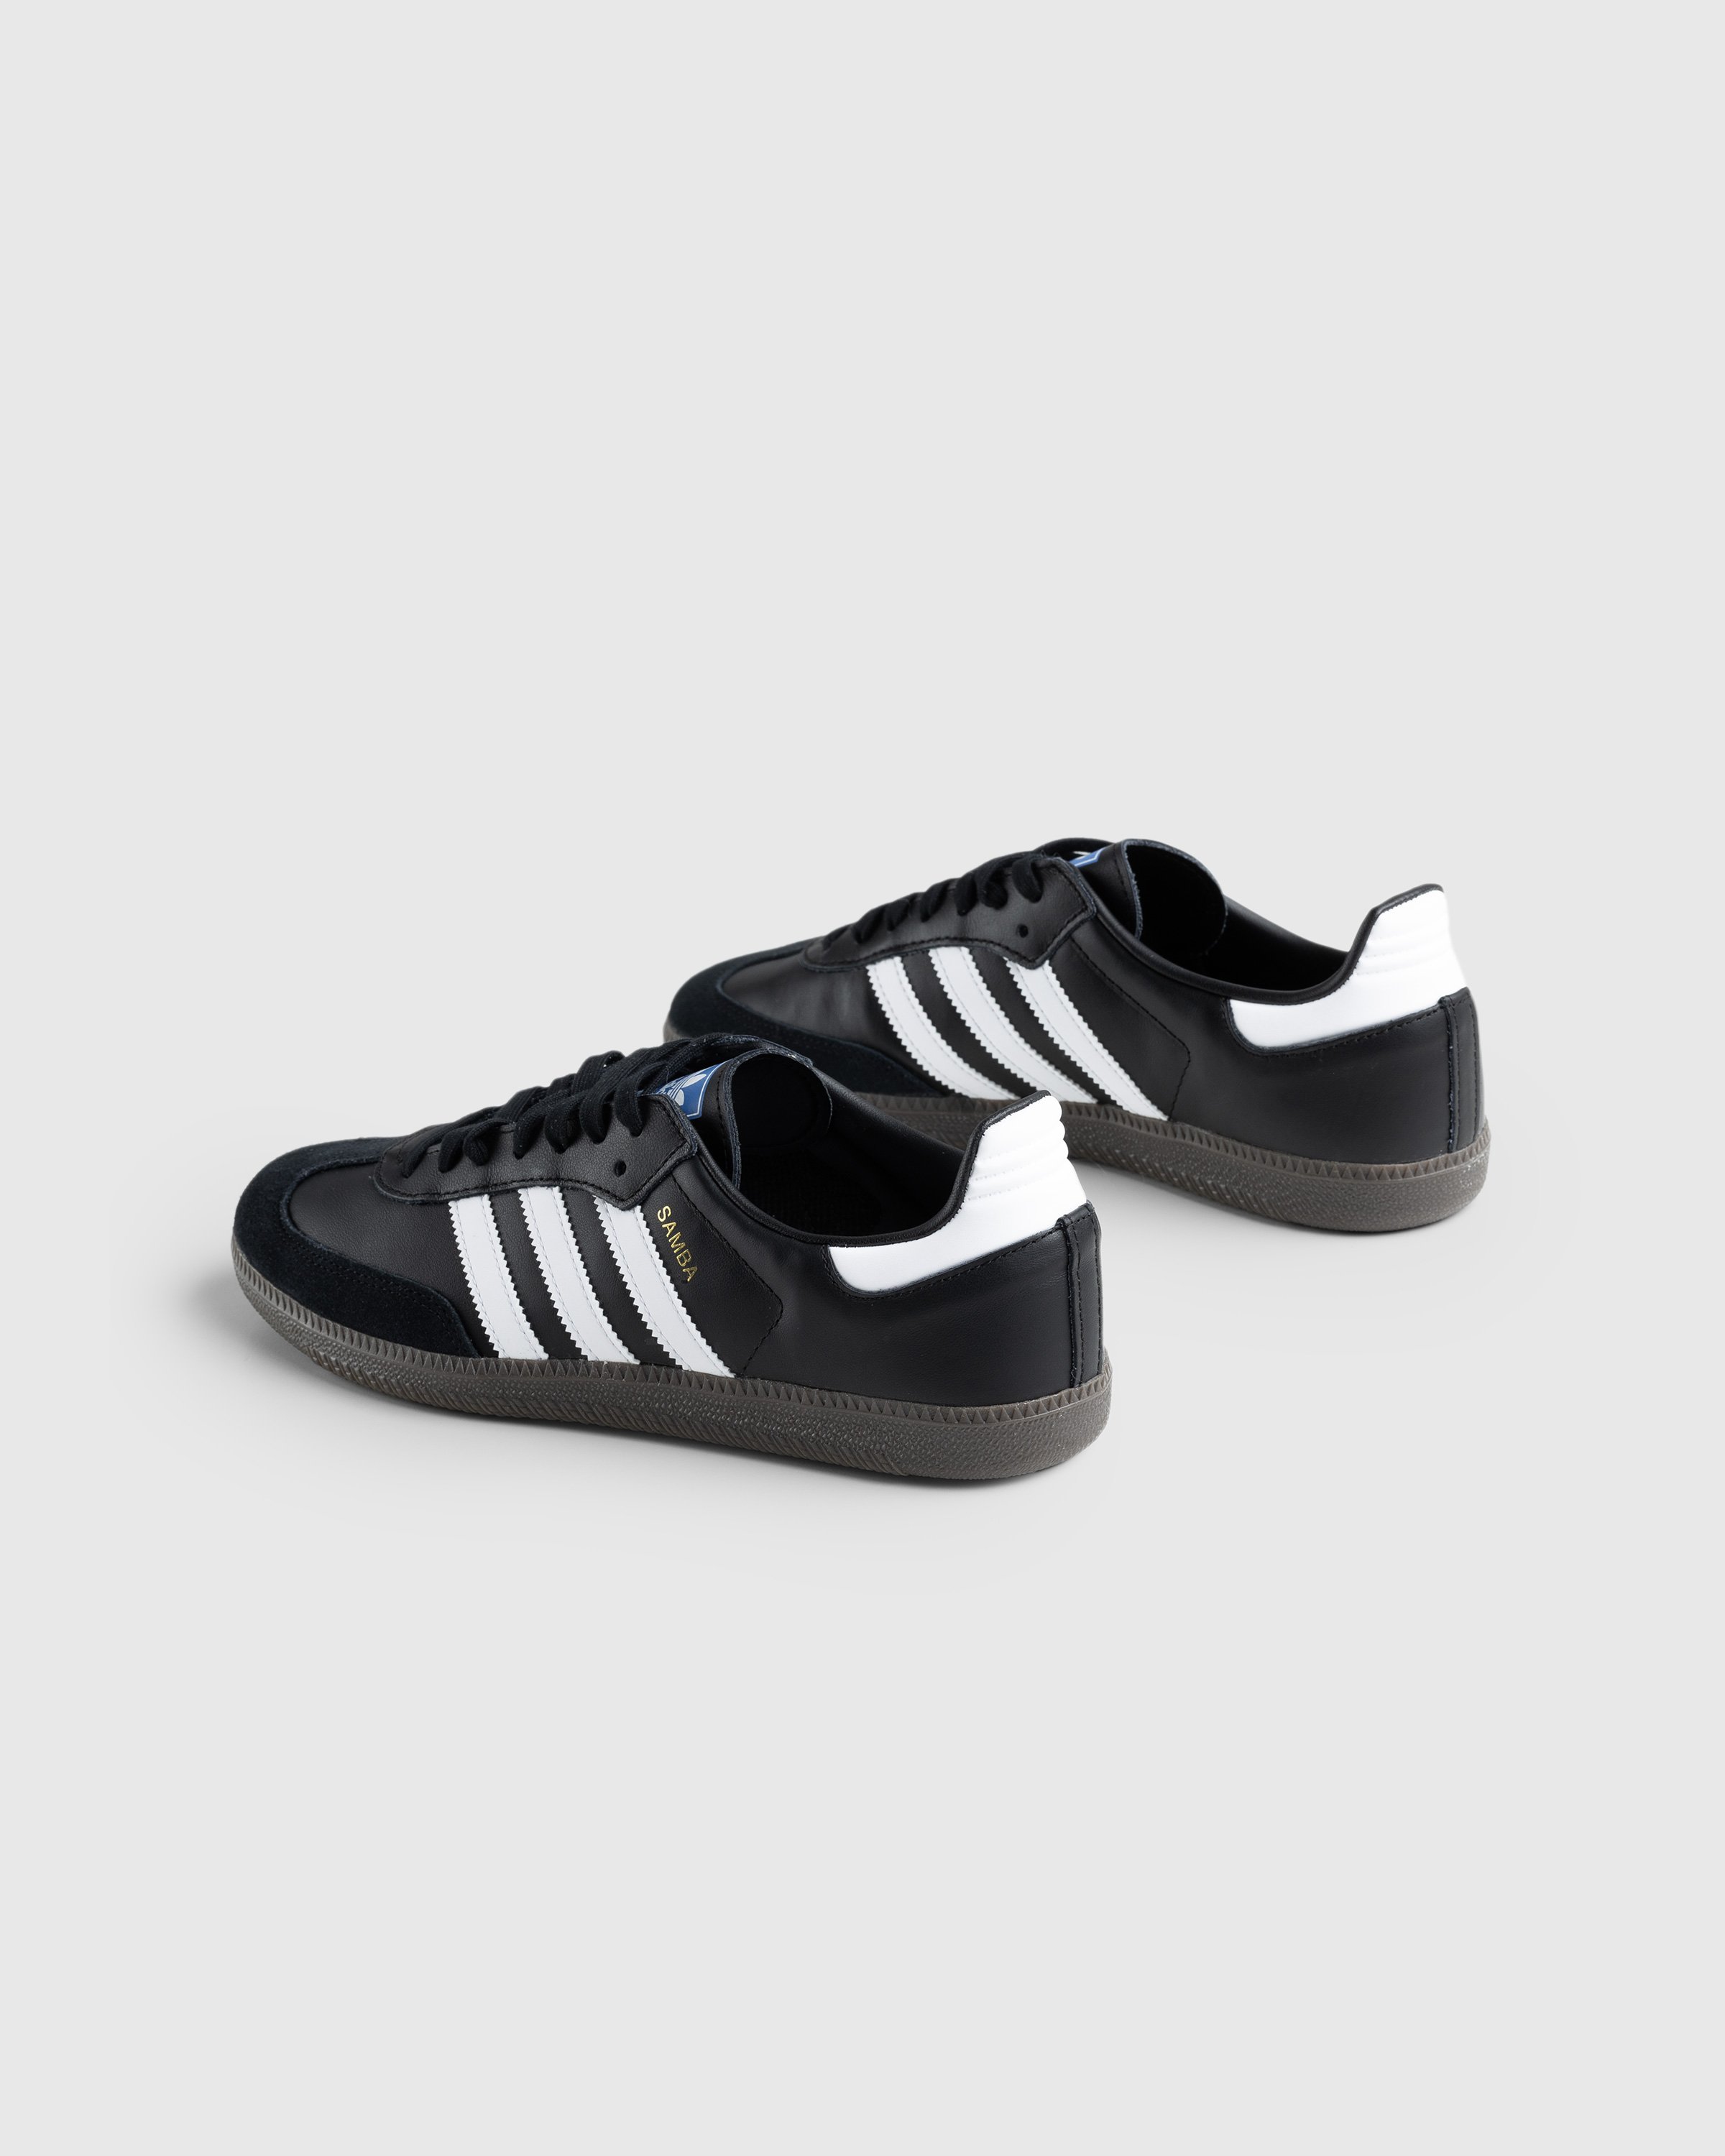 Adidas - Samba OG Black/White/Gum - Footwear - Black - Image 4